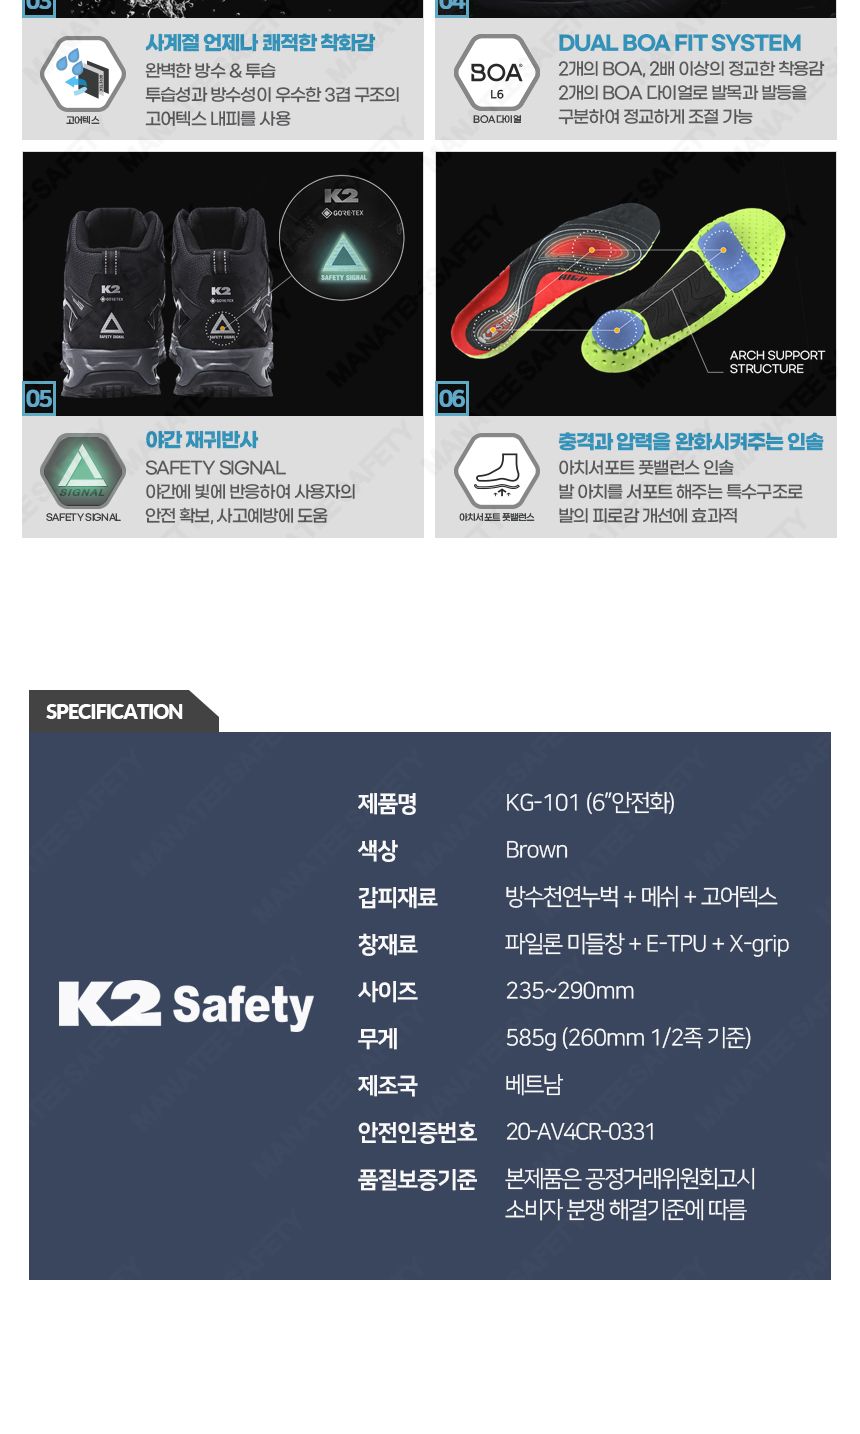 K2안전화 KG-101 고어텍스 다이얼 (6인치) 안전화 작업화 작업용신발 안전신발 작업안전화 안전보호신발 안전보호화 현장작업화 산업용신발 작업용안전화 산업현장작업화 보호신발 공장안전화 공장작업화